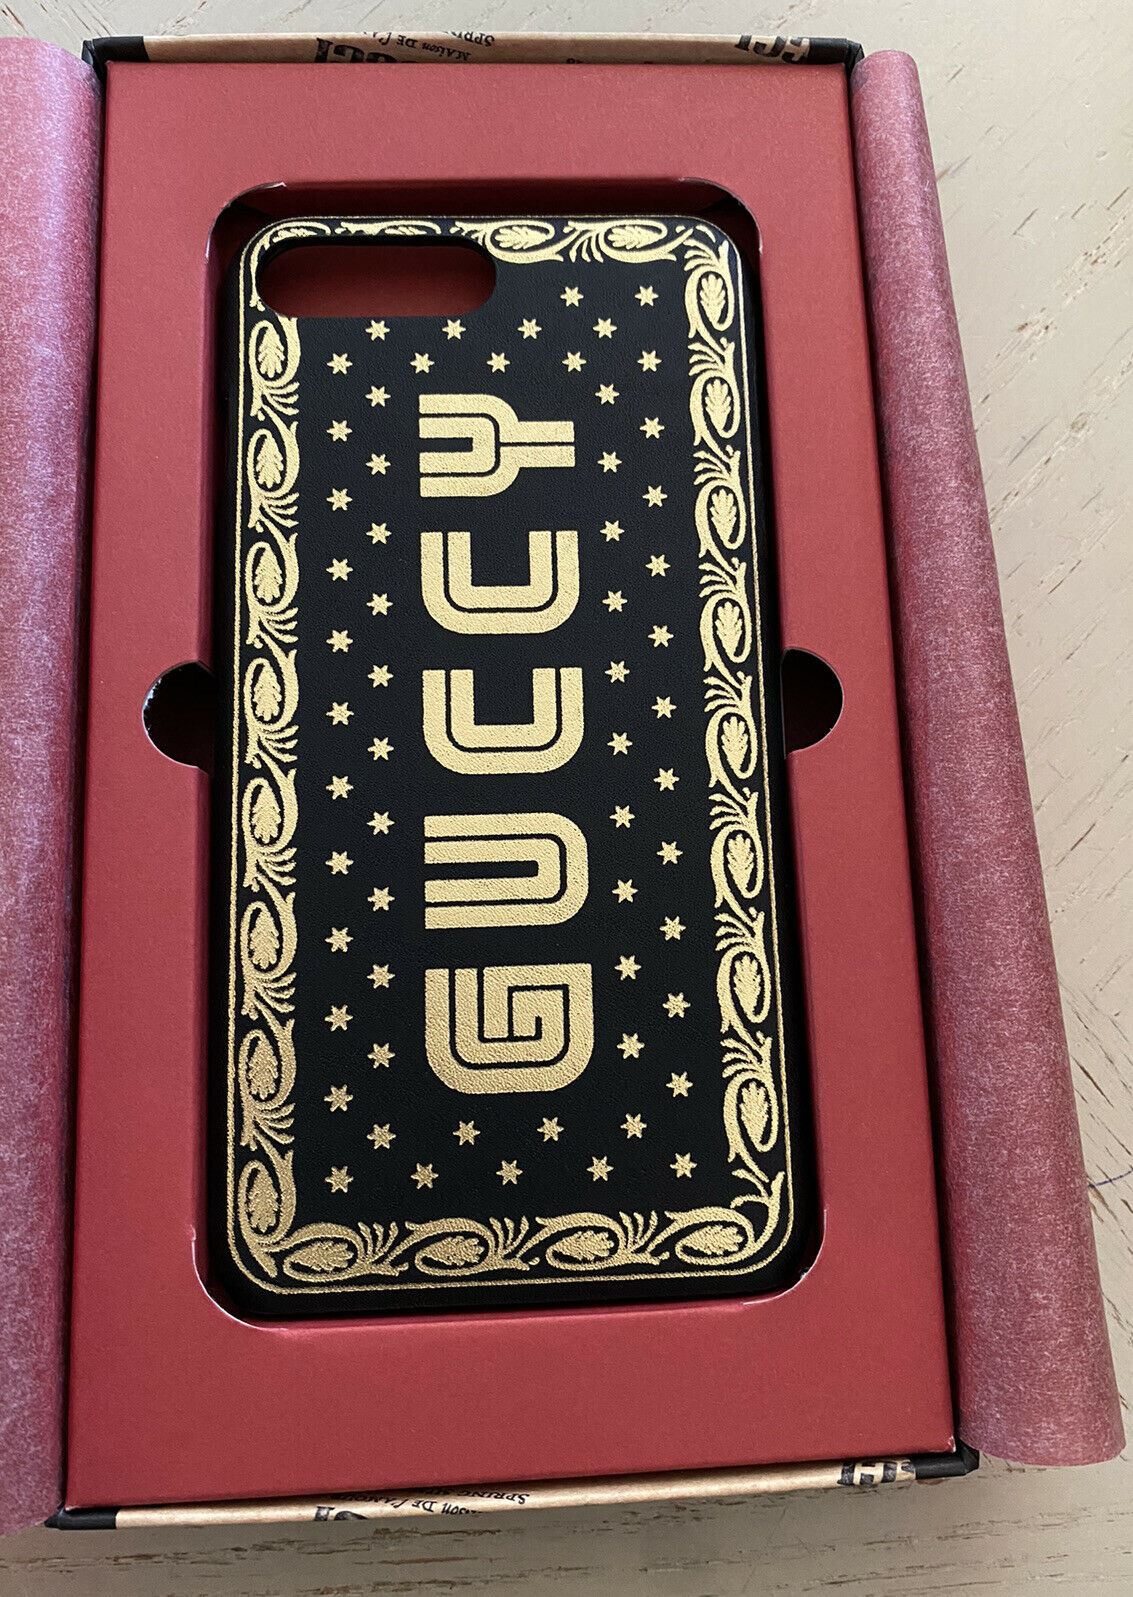 Новый чехол Gucci для iPhone 7 Plus/8 Plus за 640 долларов Gucci Monogram Black Italy